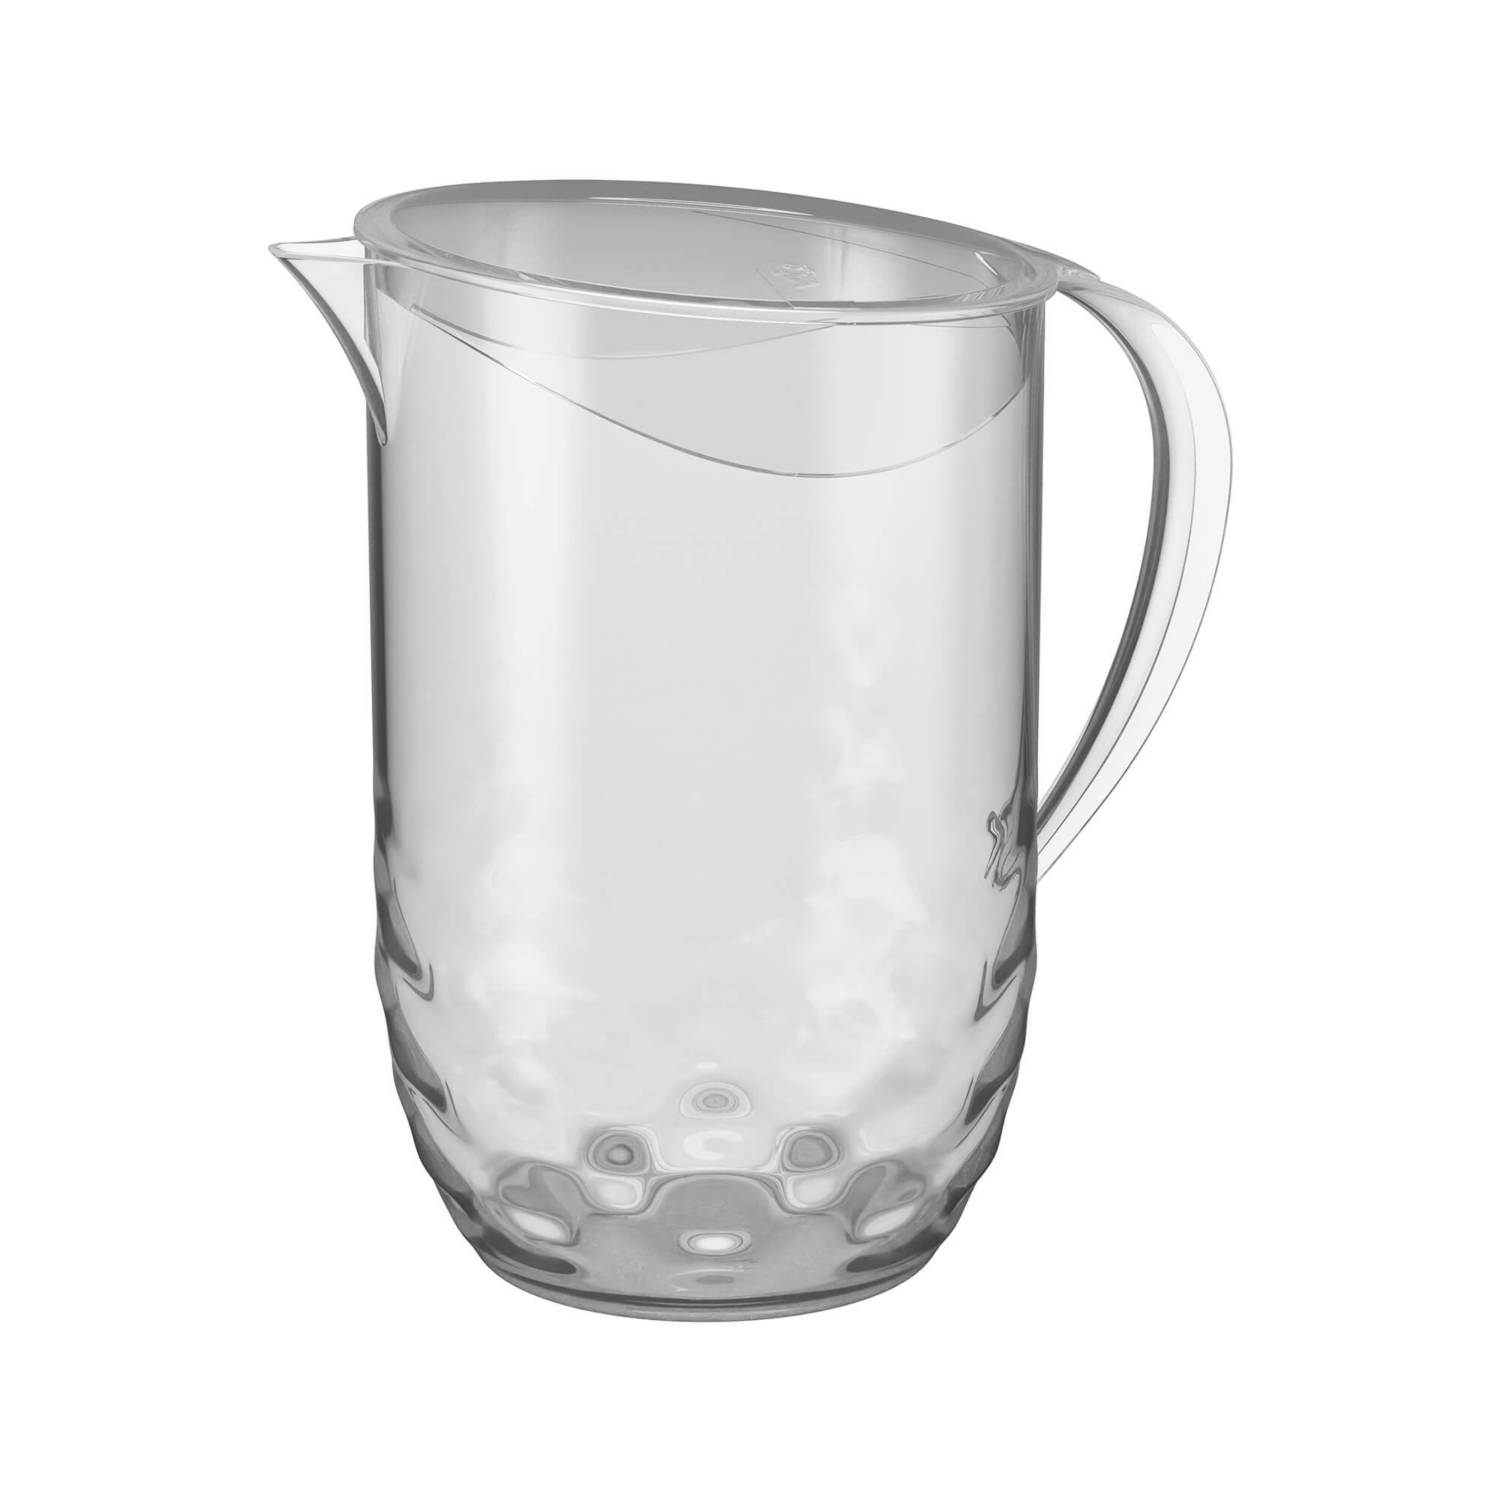 Miudeco jarra agua cristal, jarra cristal 2.2 litros / 74 oz con